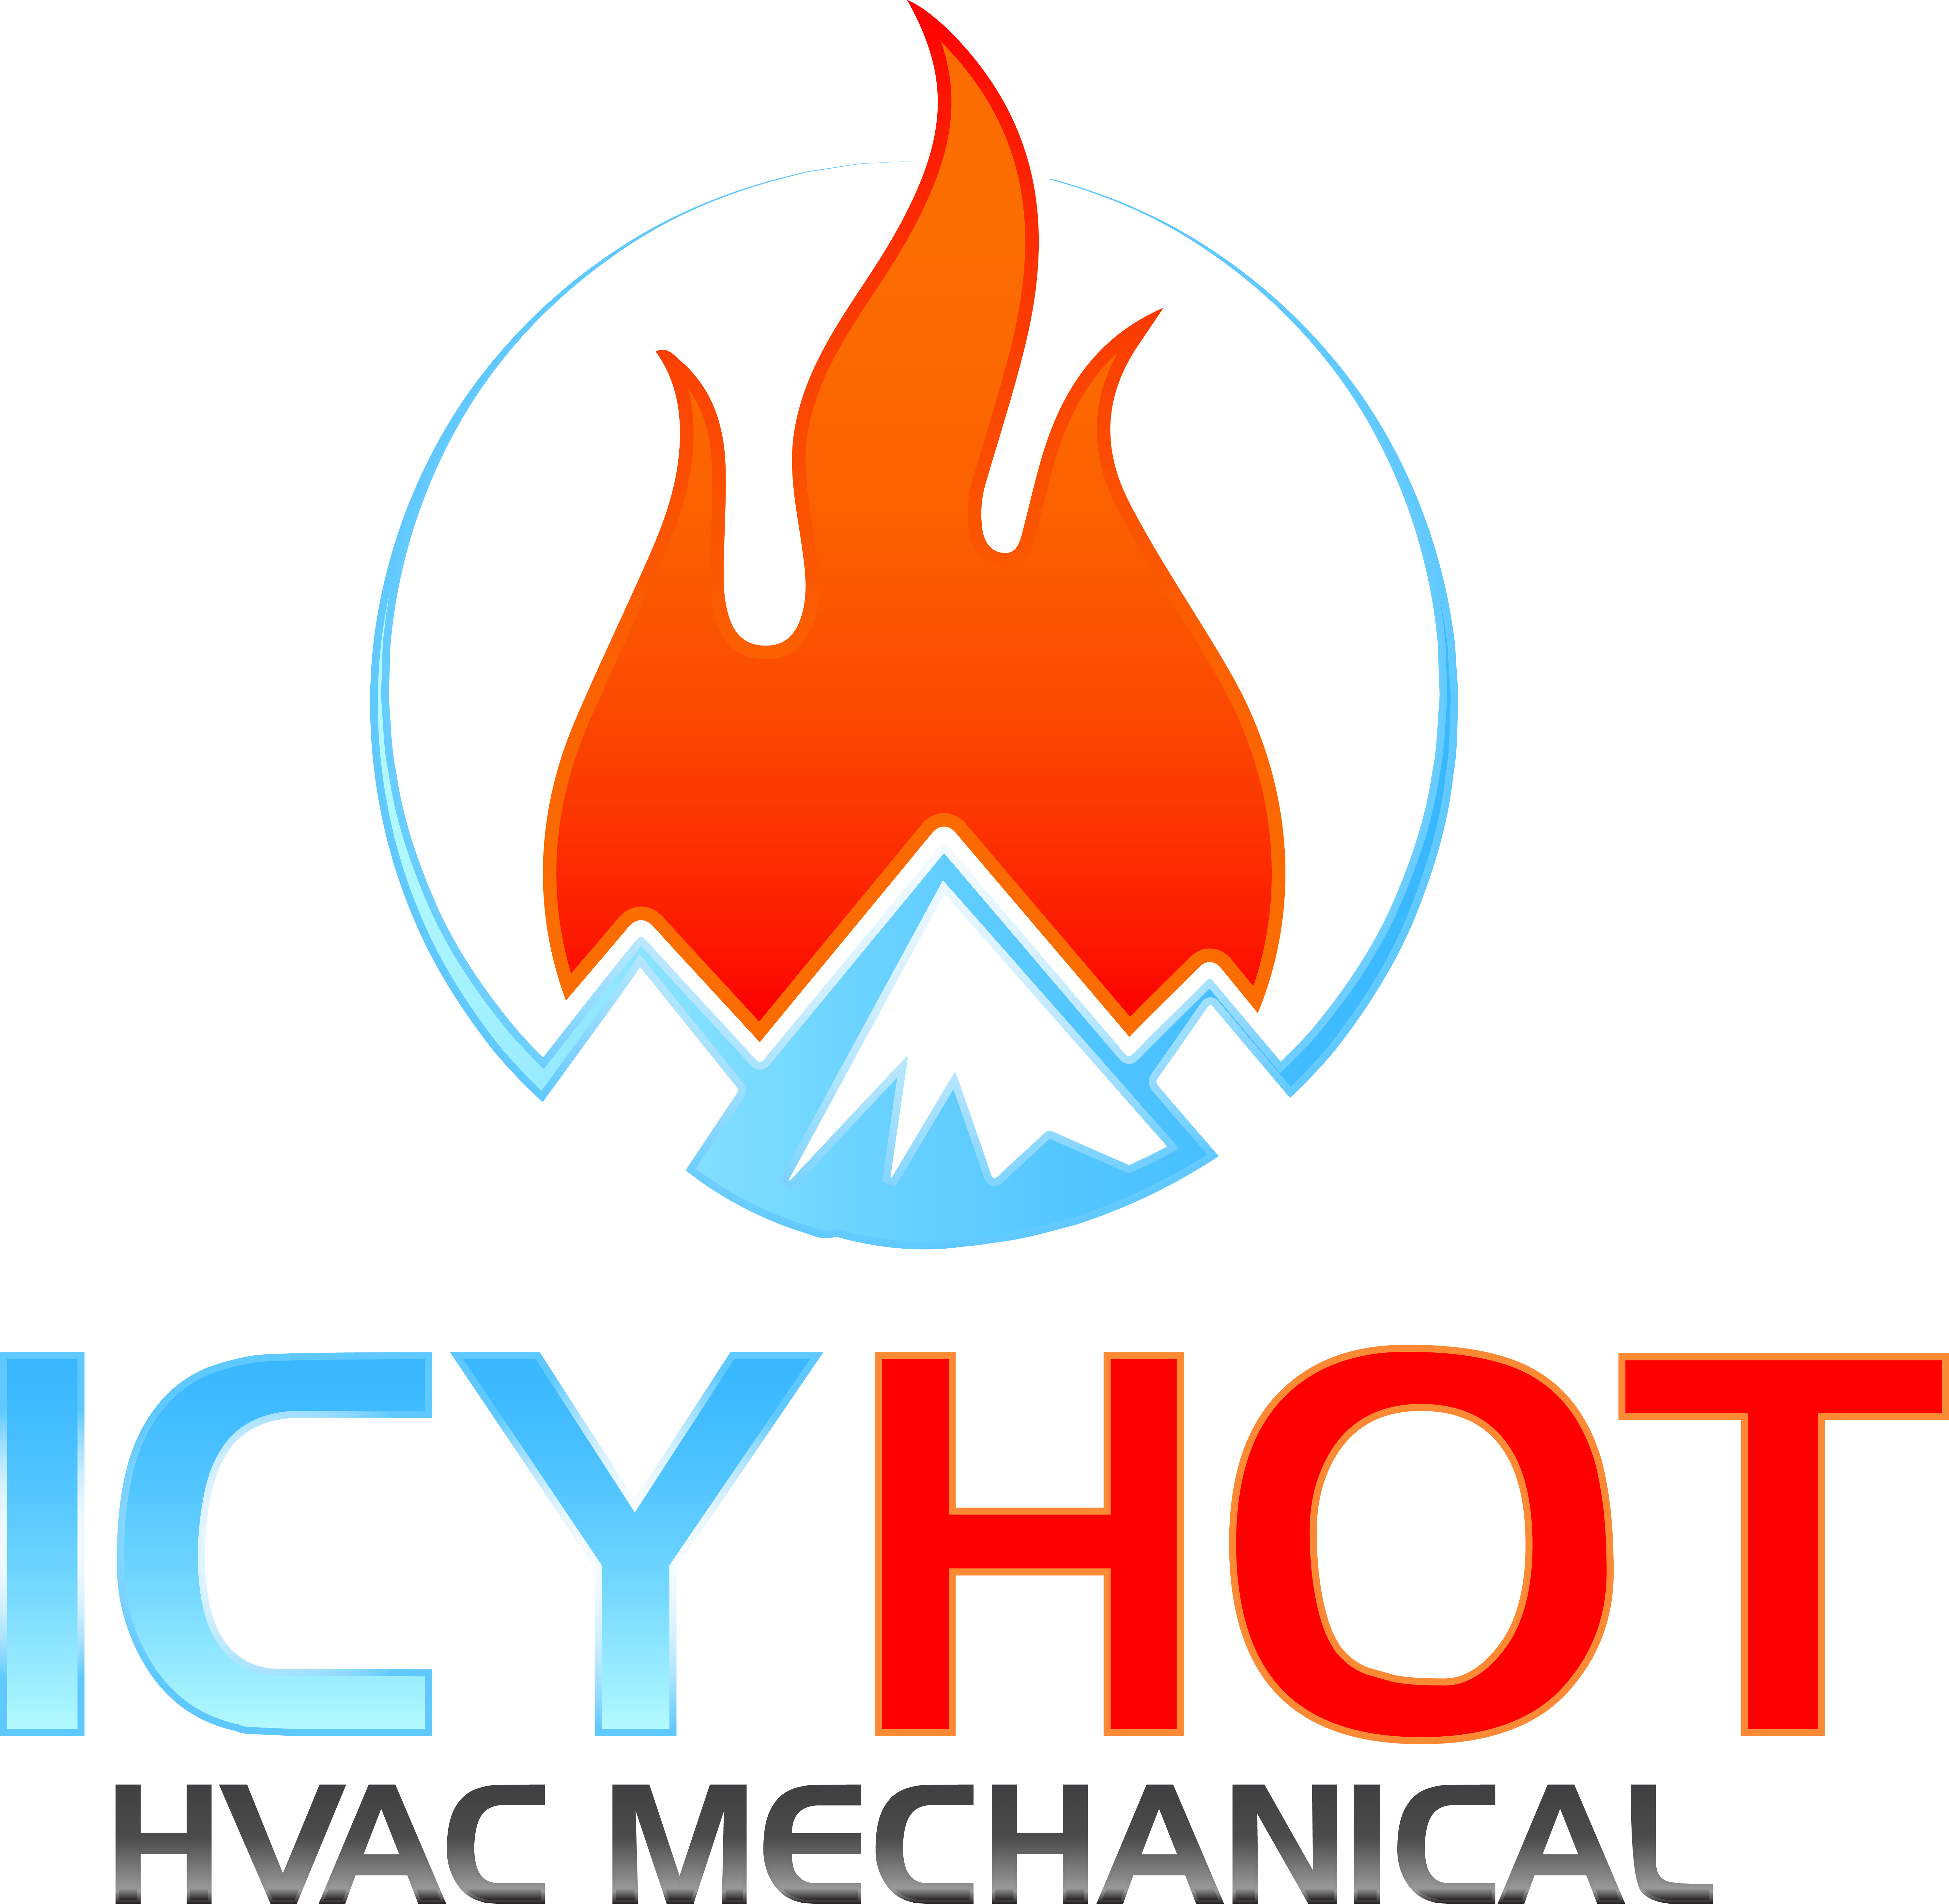 IcyHot Hvac Mechanical's logo